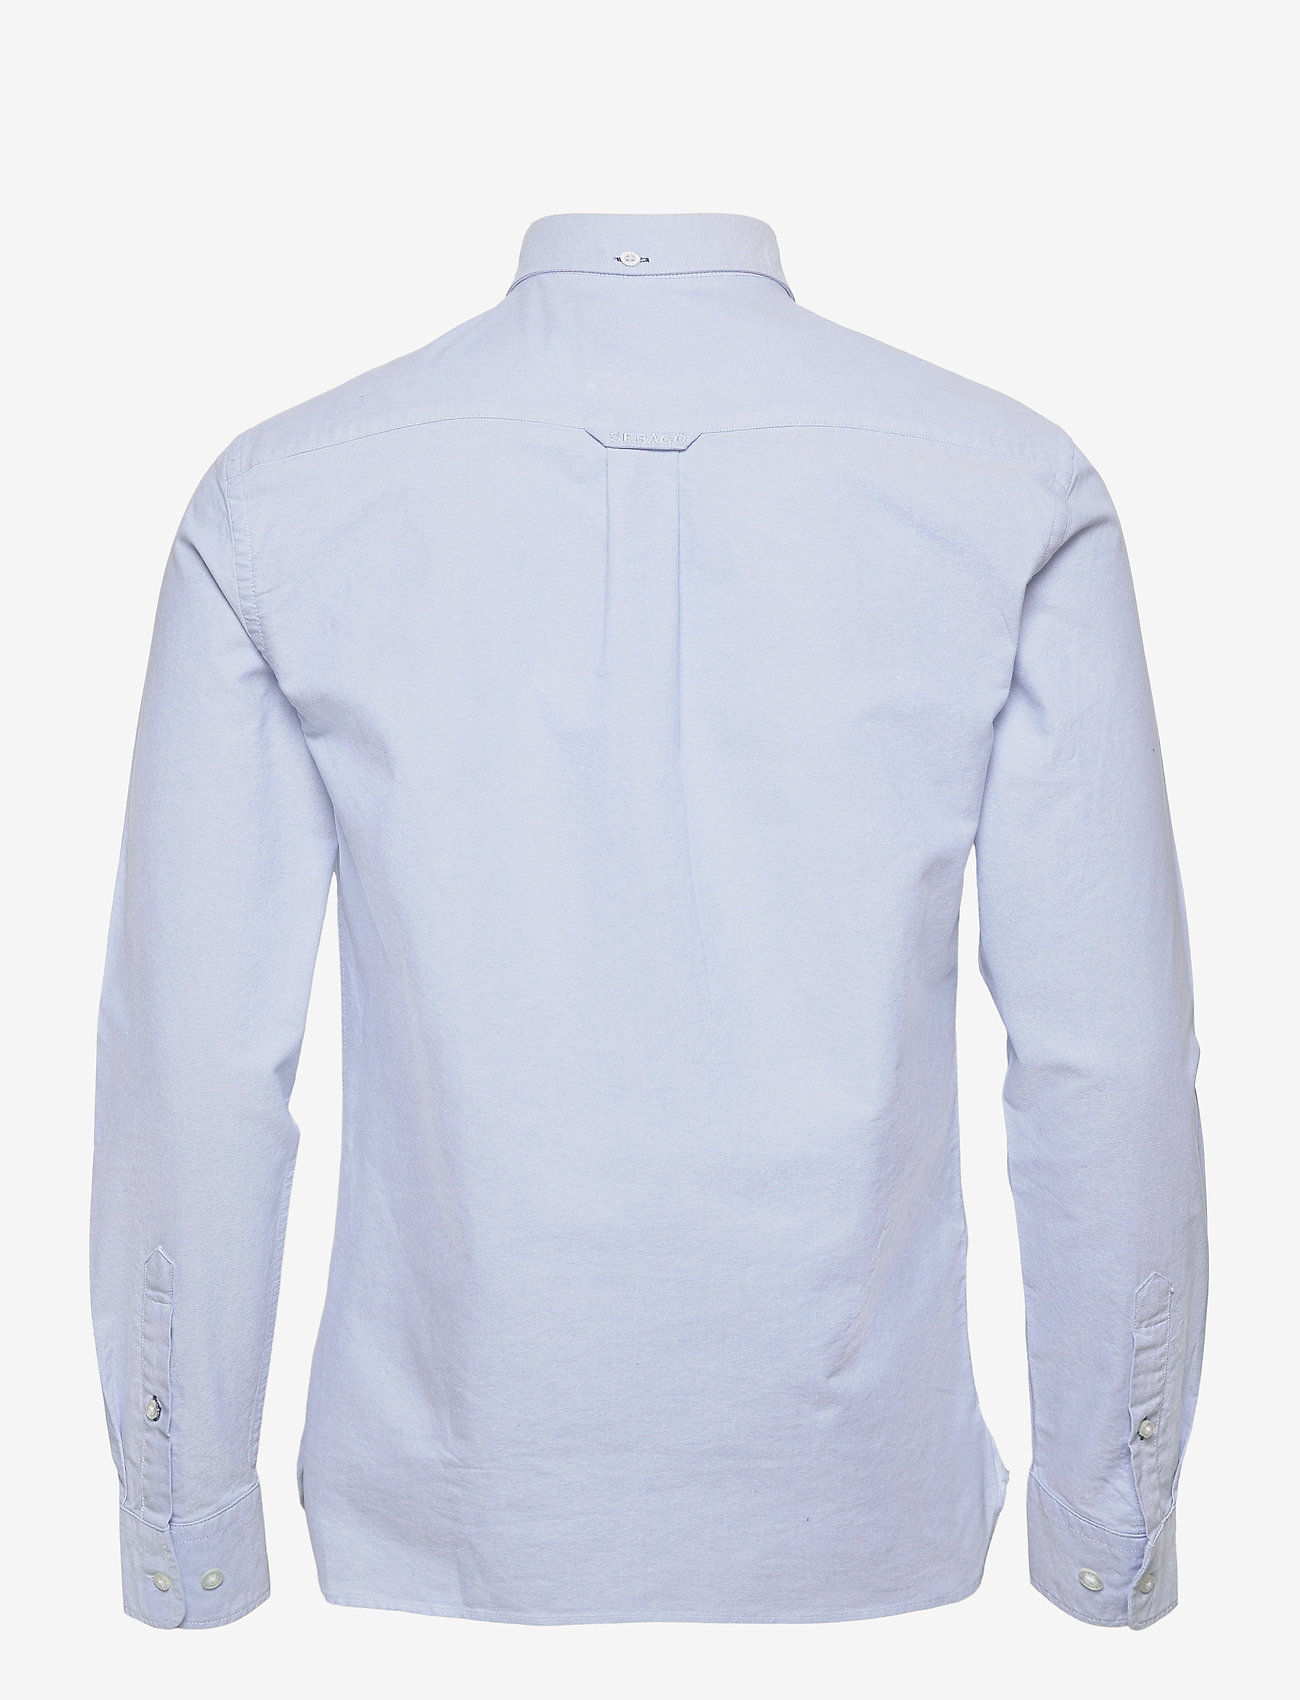 Sebago - Oxford Classic Shirt B.D. - oxford-skjorter - light blue - 1